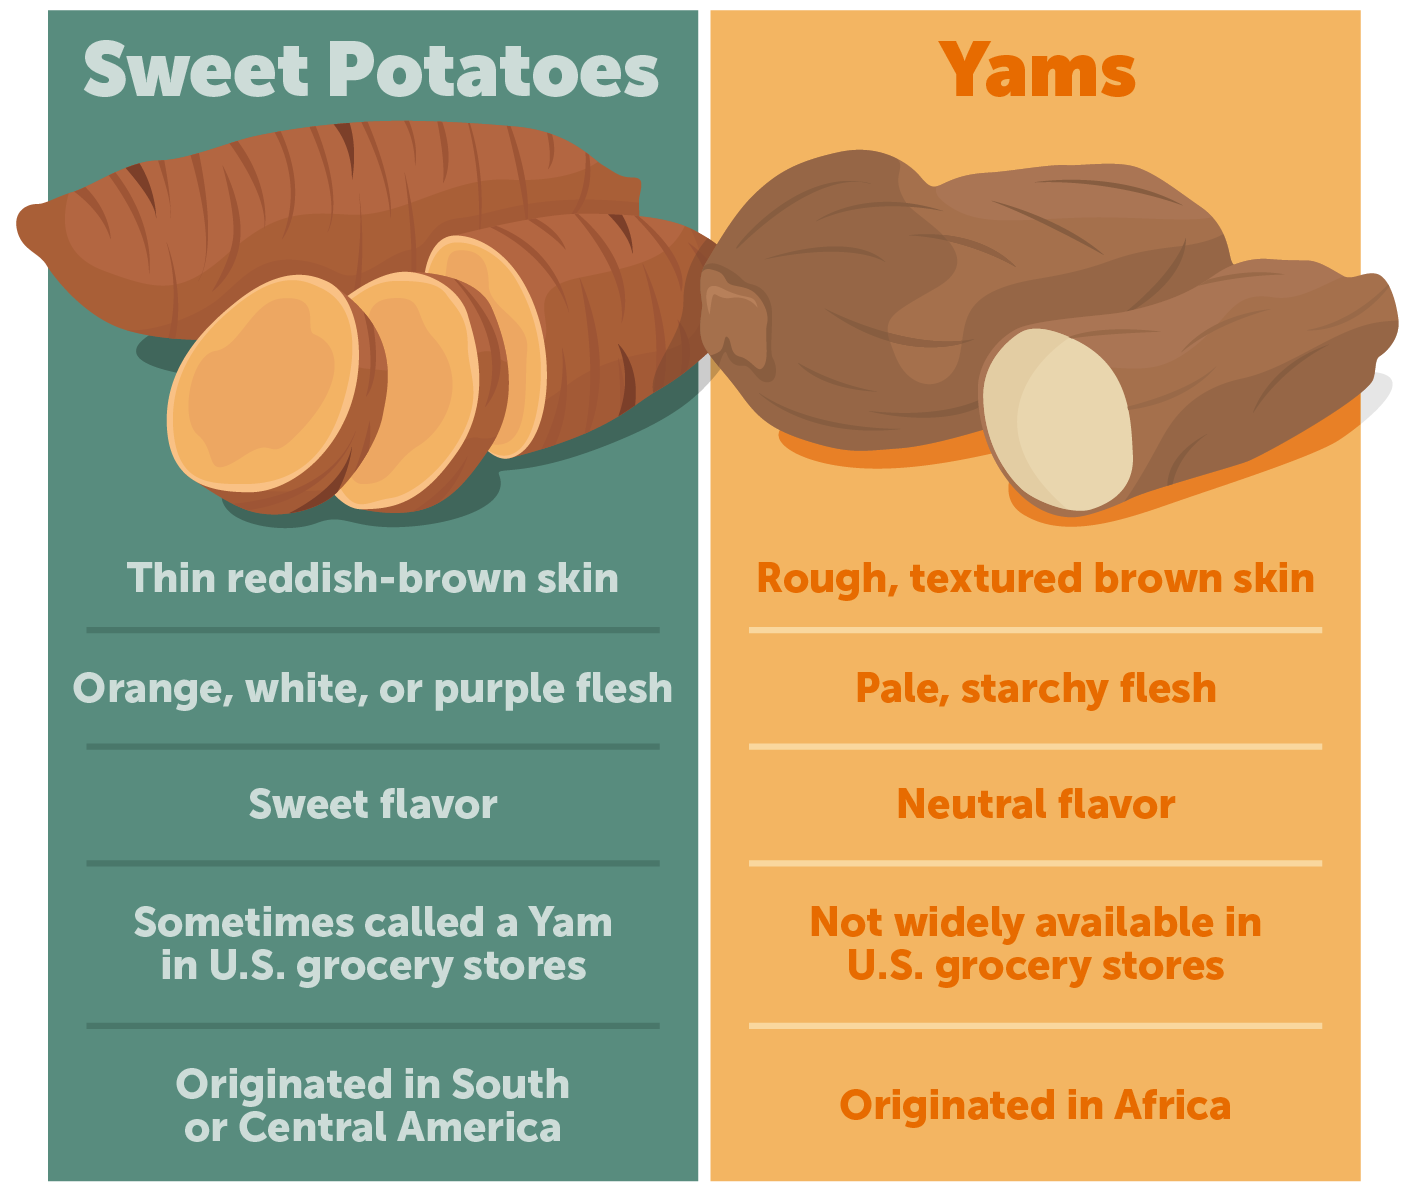 Sweet Potatoes vs. Yams infographic.